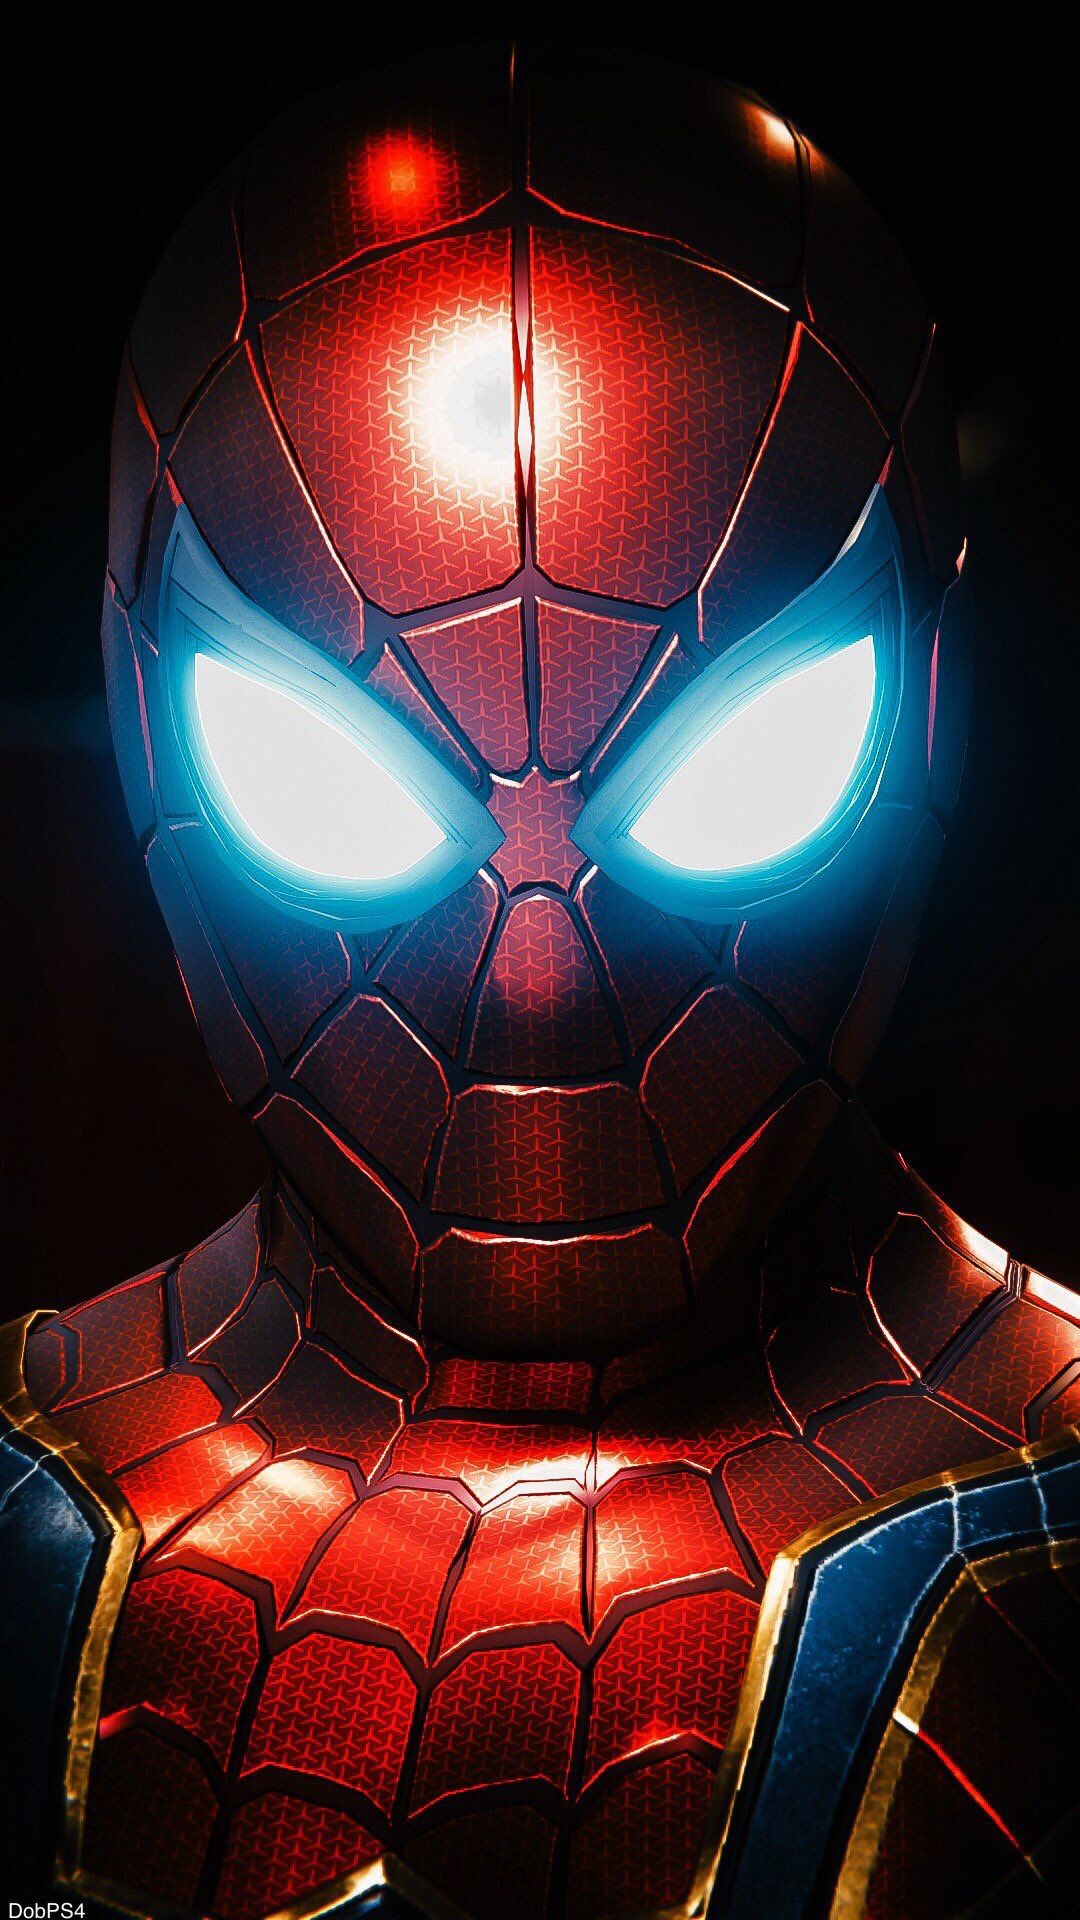 Spider Man Suit Avengers Infinity War - 1080x1920 Wallpaper 